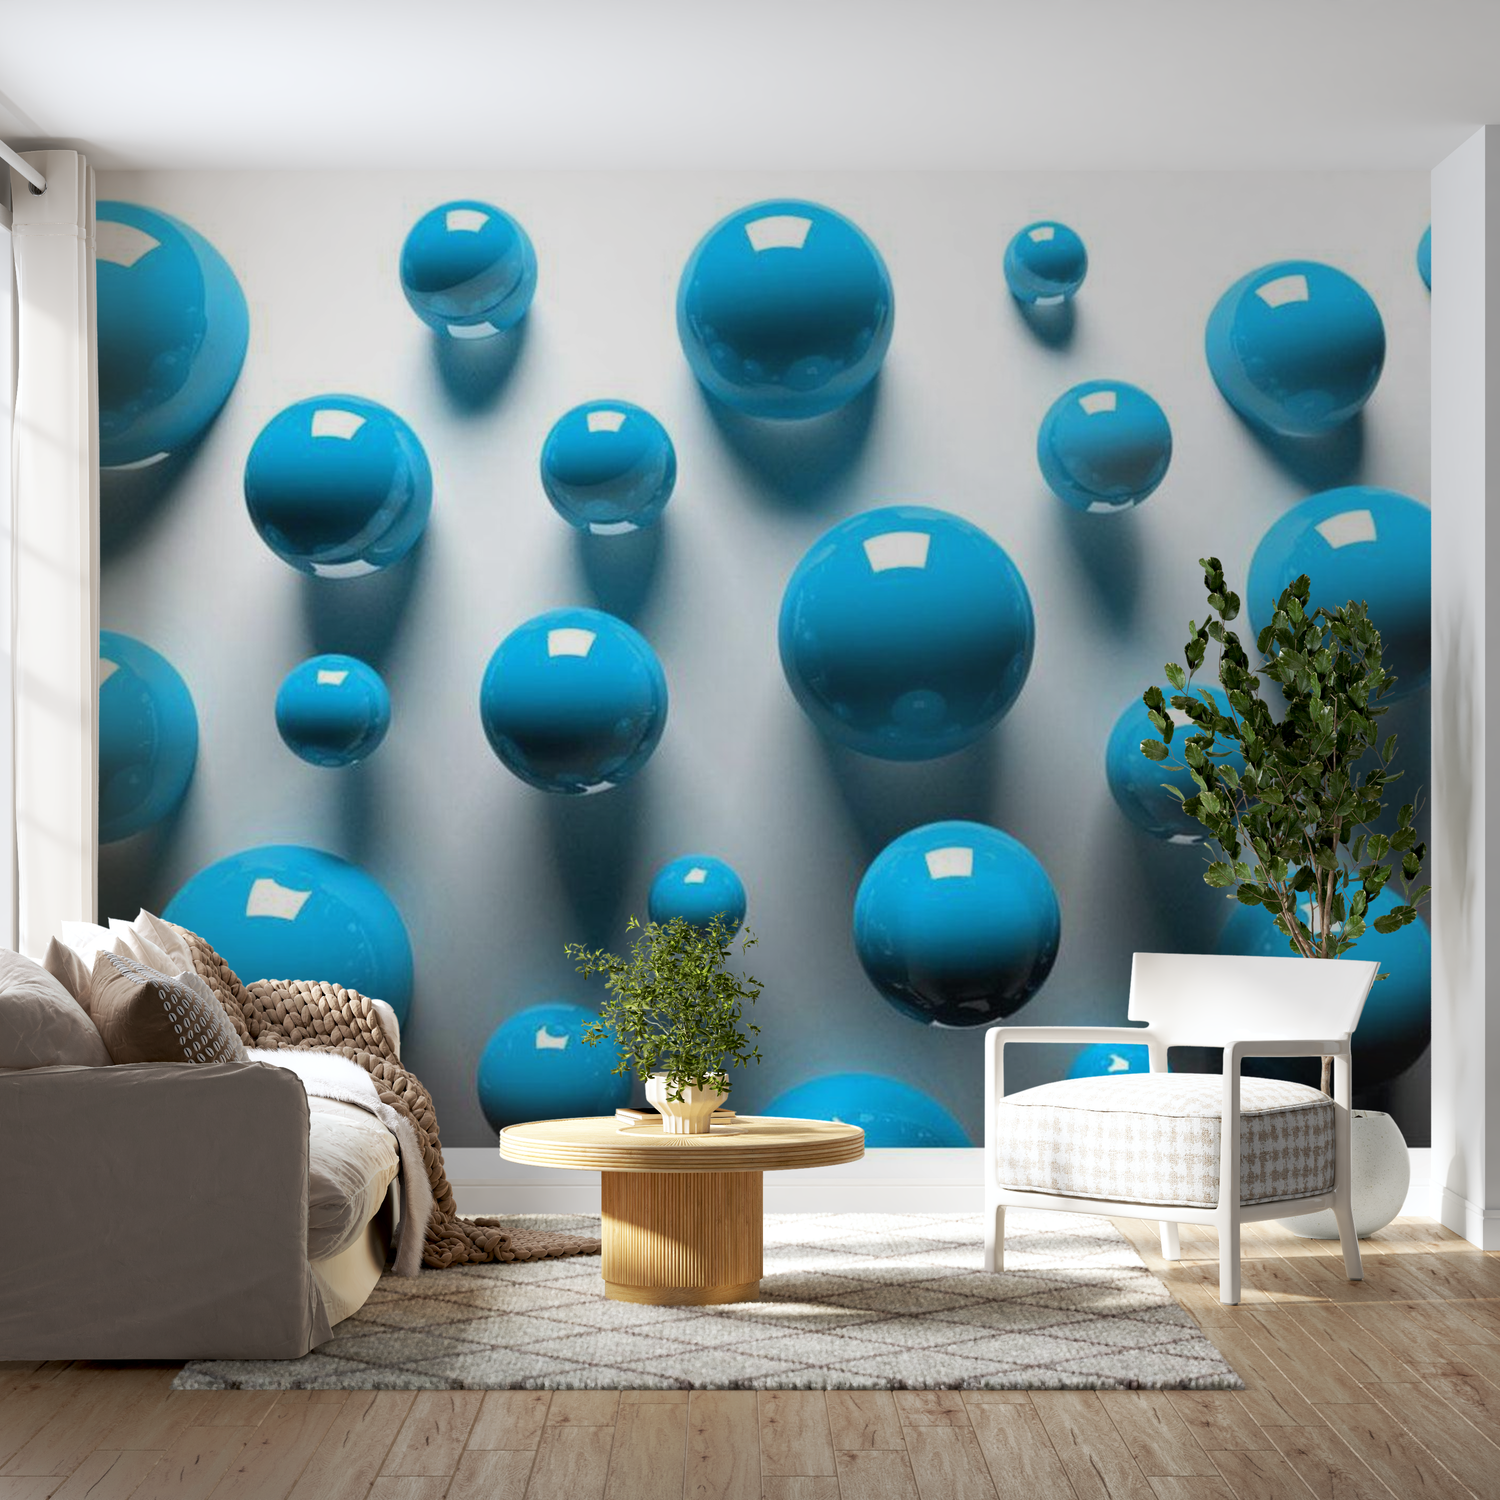 3D Illusion Wallpaper Wall Mural - Blue Balls 39"Wx27"H